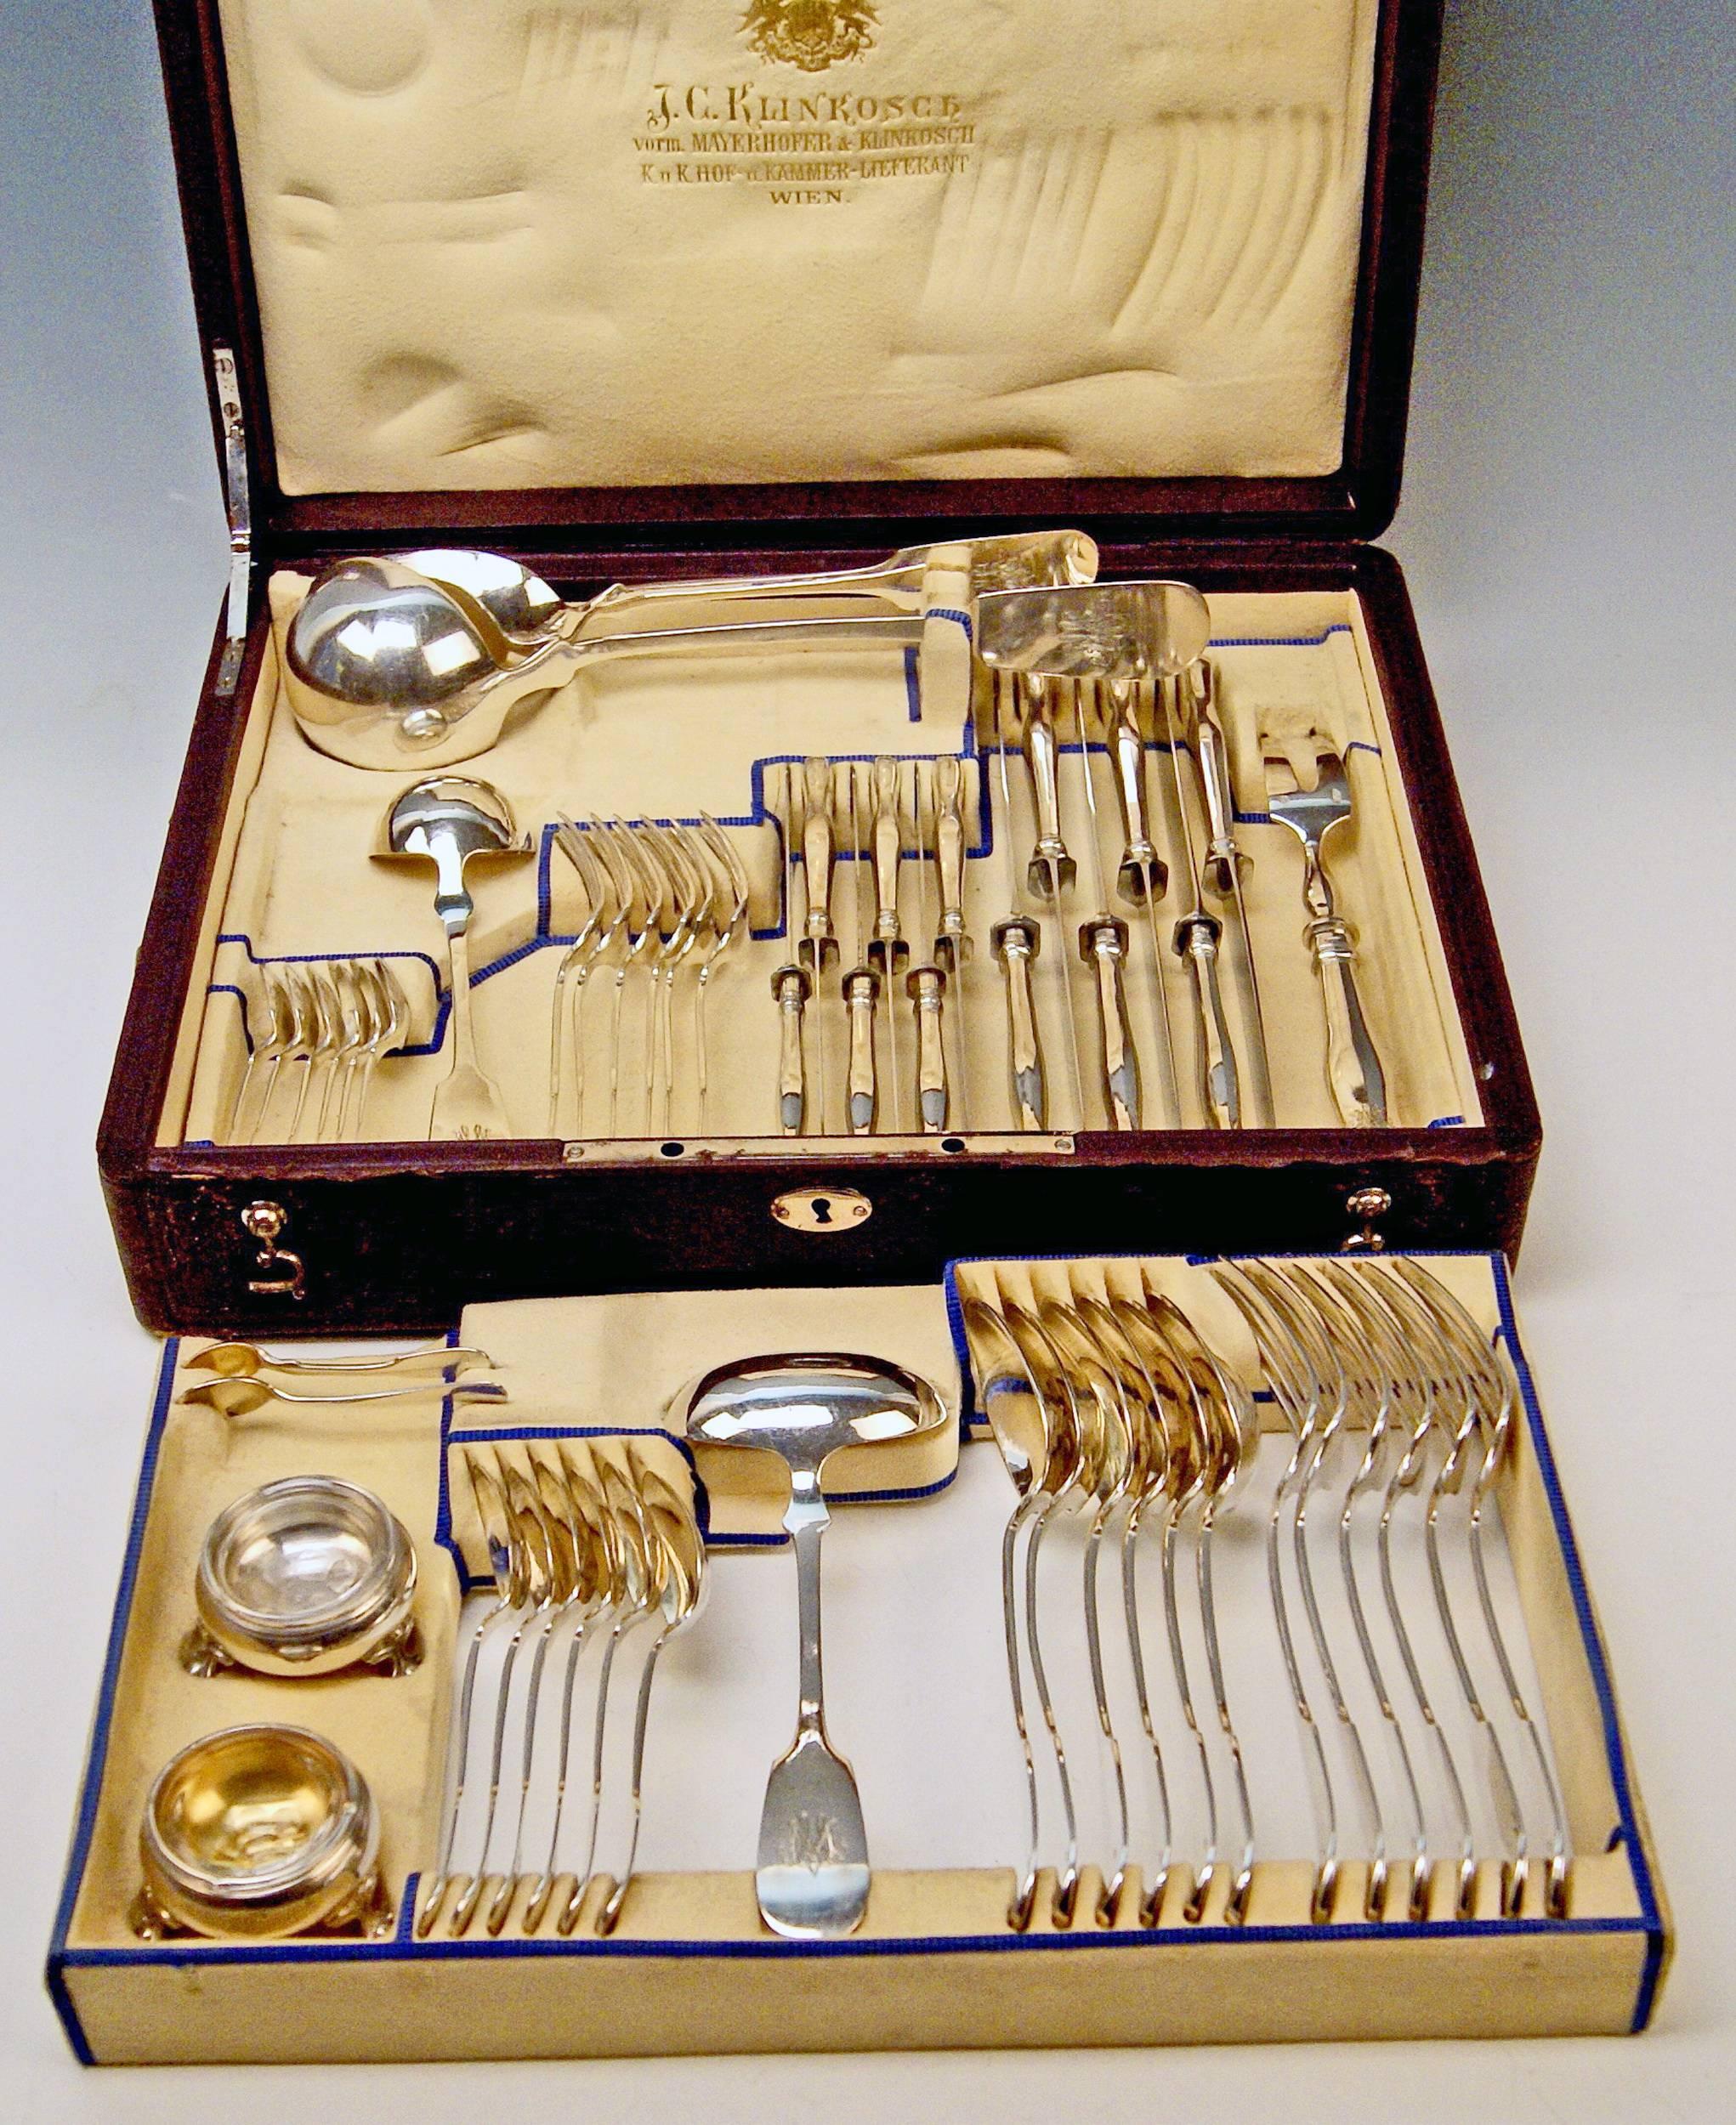 Austrian Silver Art Nouveau 51-Piece Flatware Cutlery 6 Pers. Klinkosch, Vienna c.1900